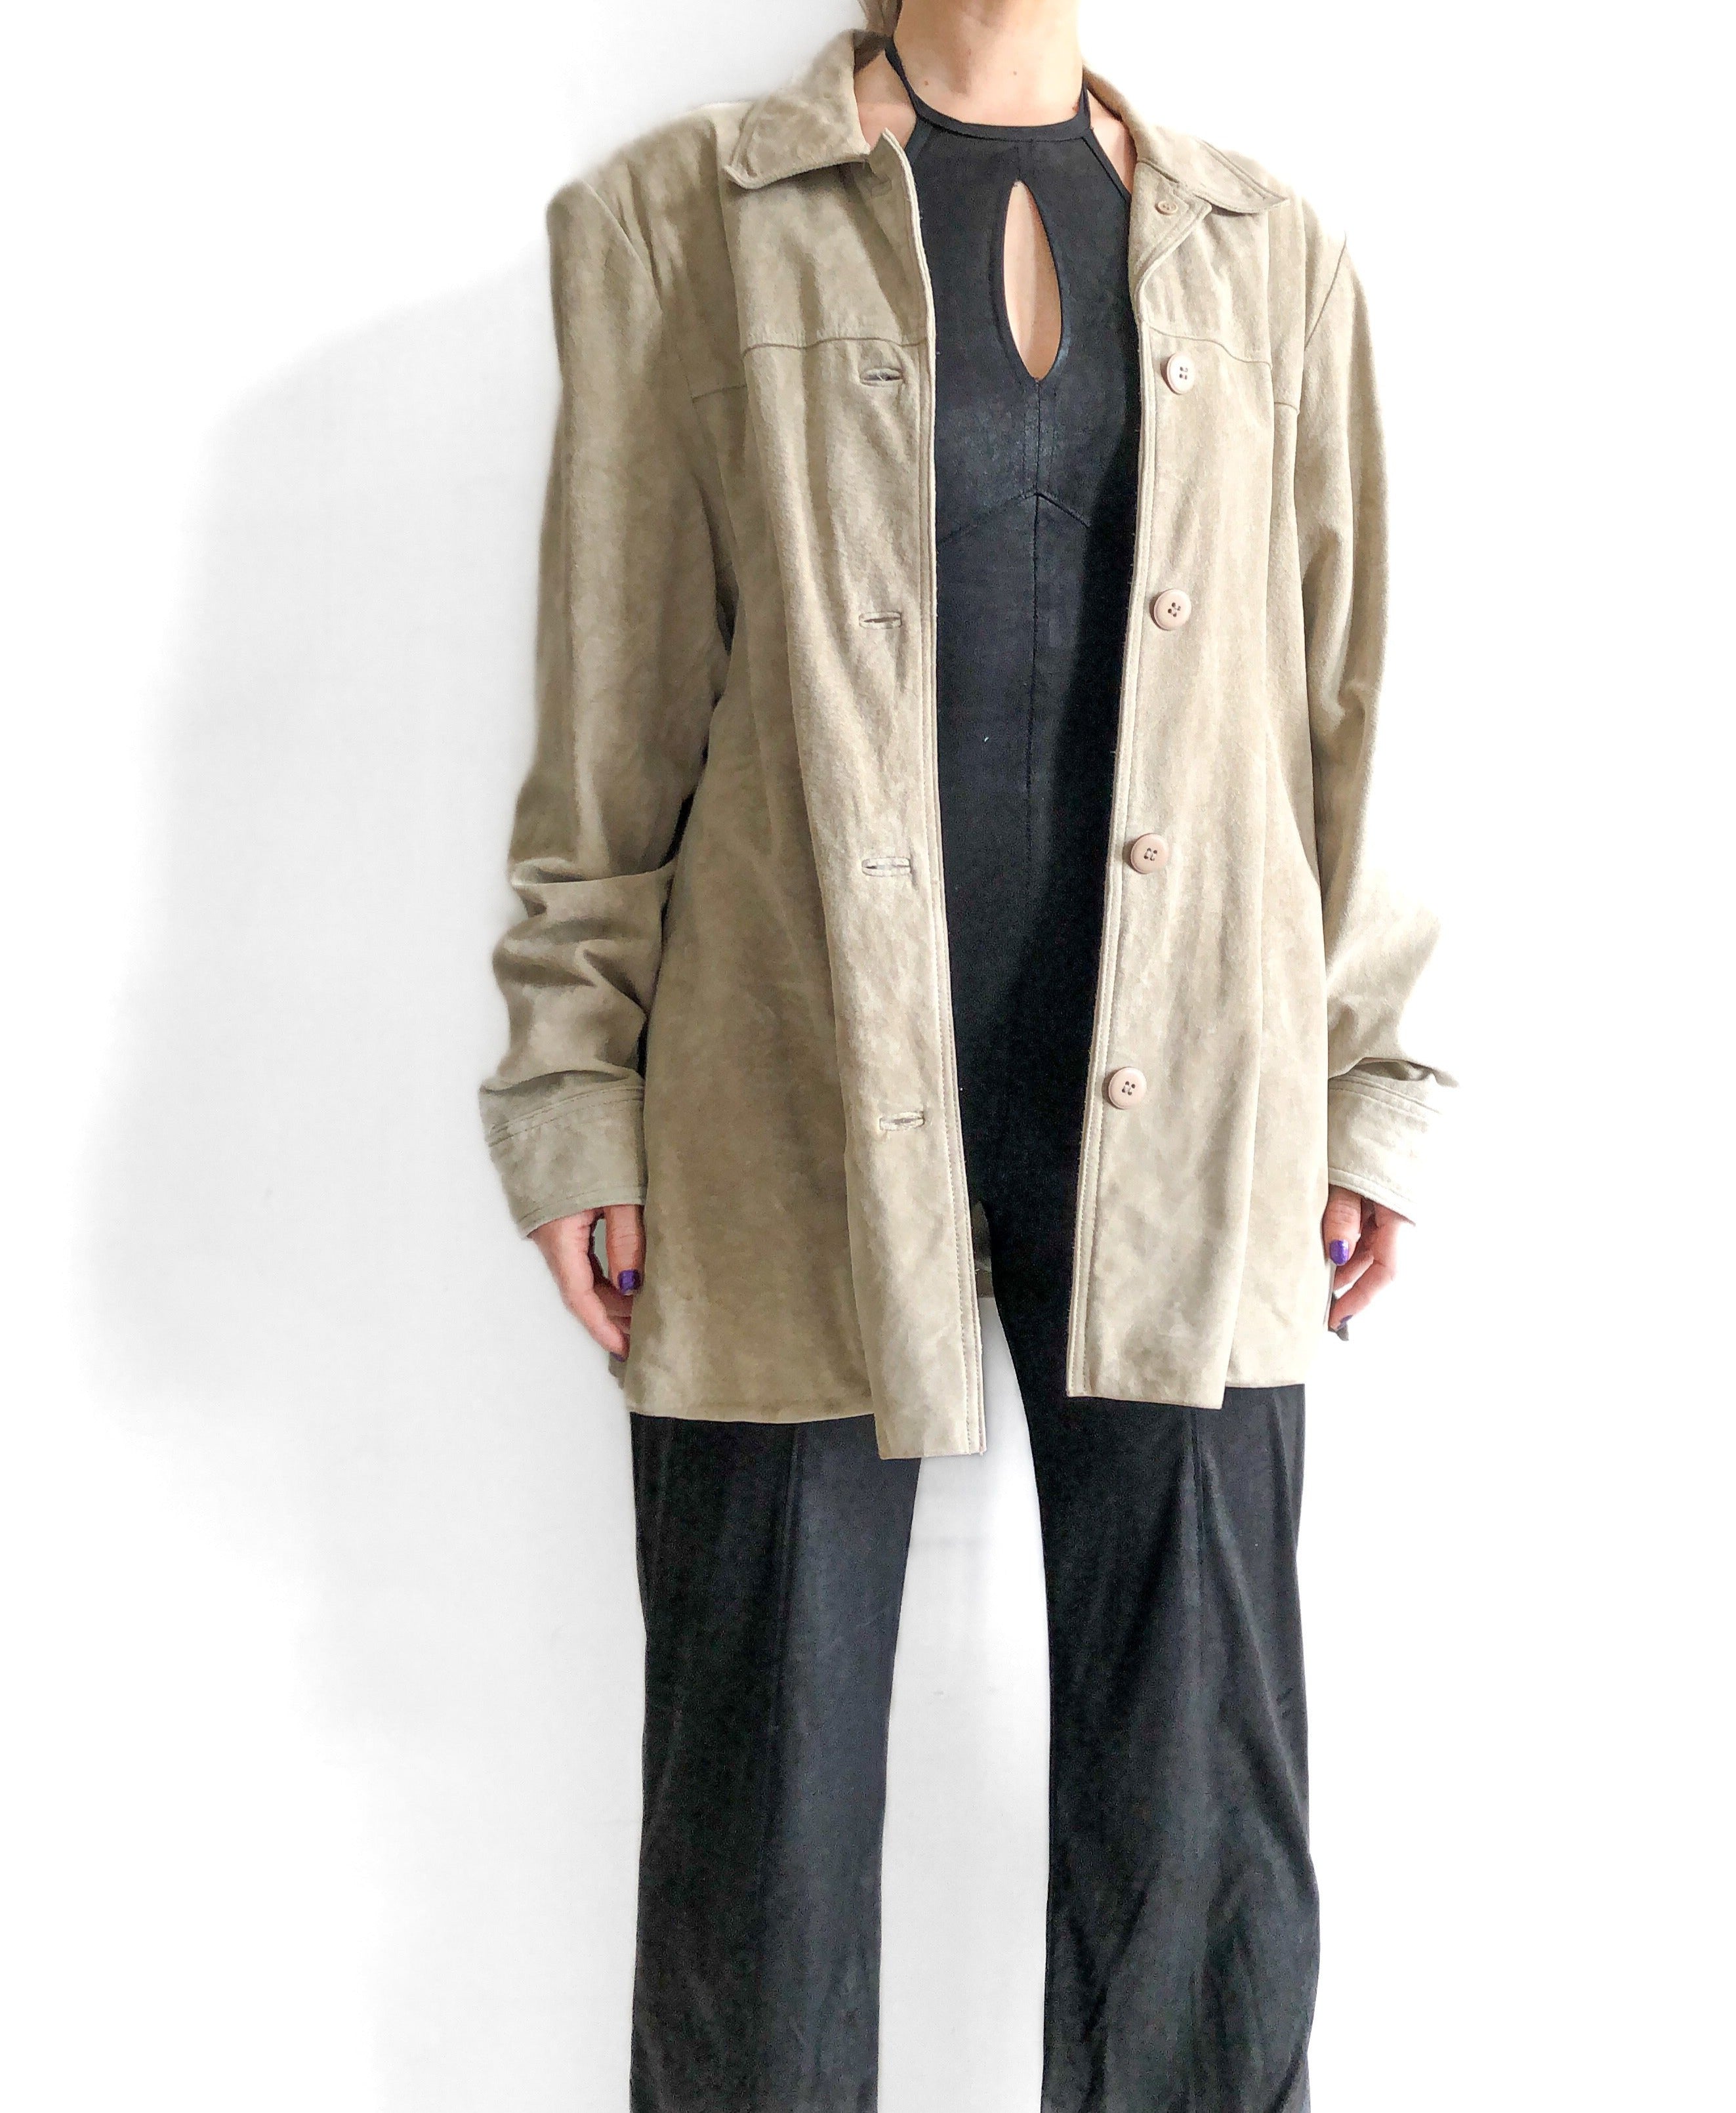 90s Suede Jacket, Beige Midi Suede Panel Jacket, Vintage Leather Panel Jacket, Size Medium Womens